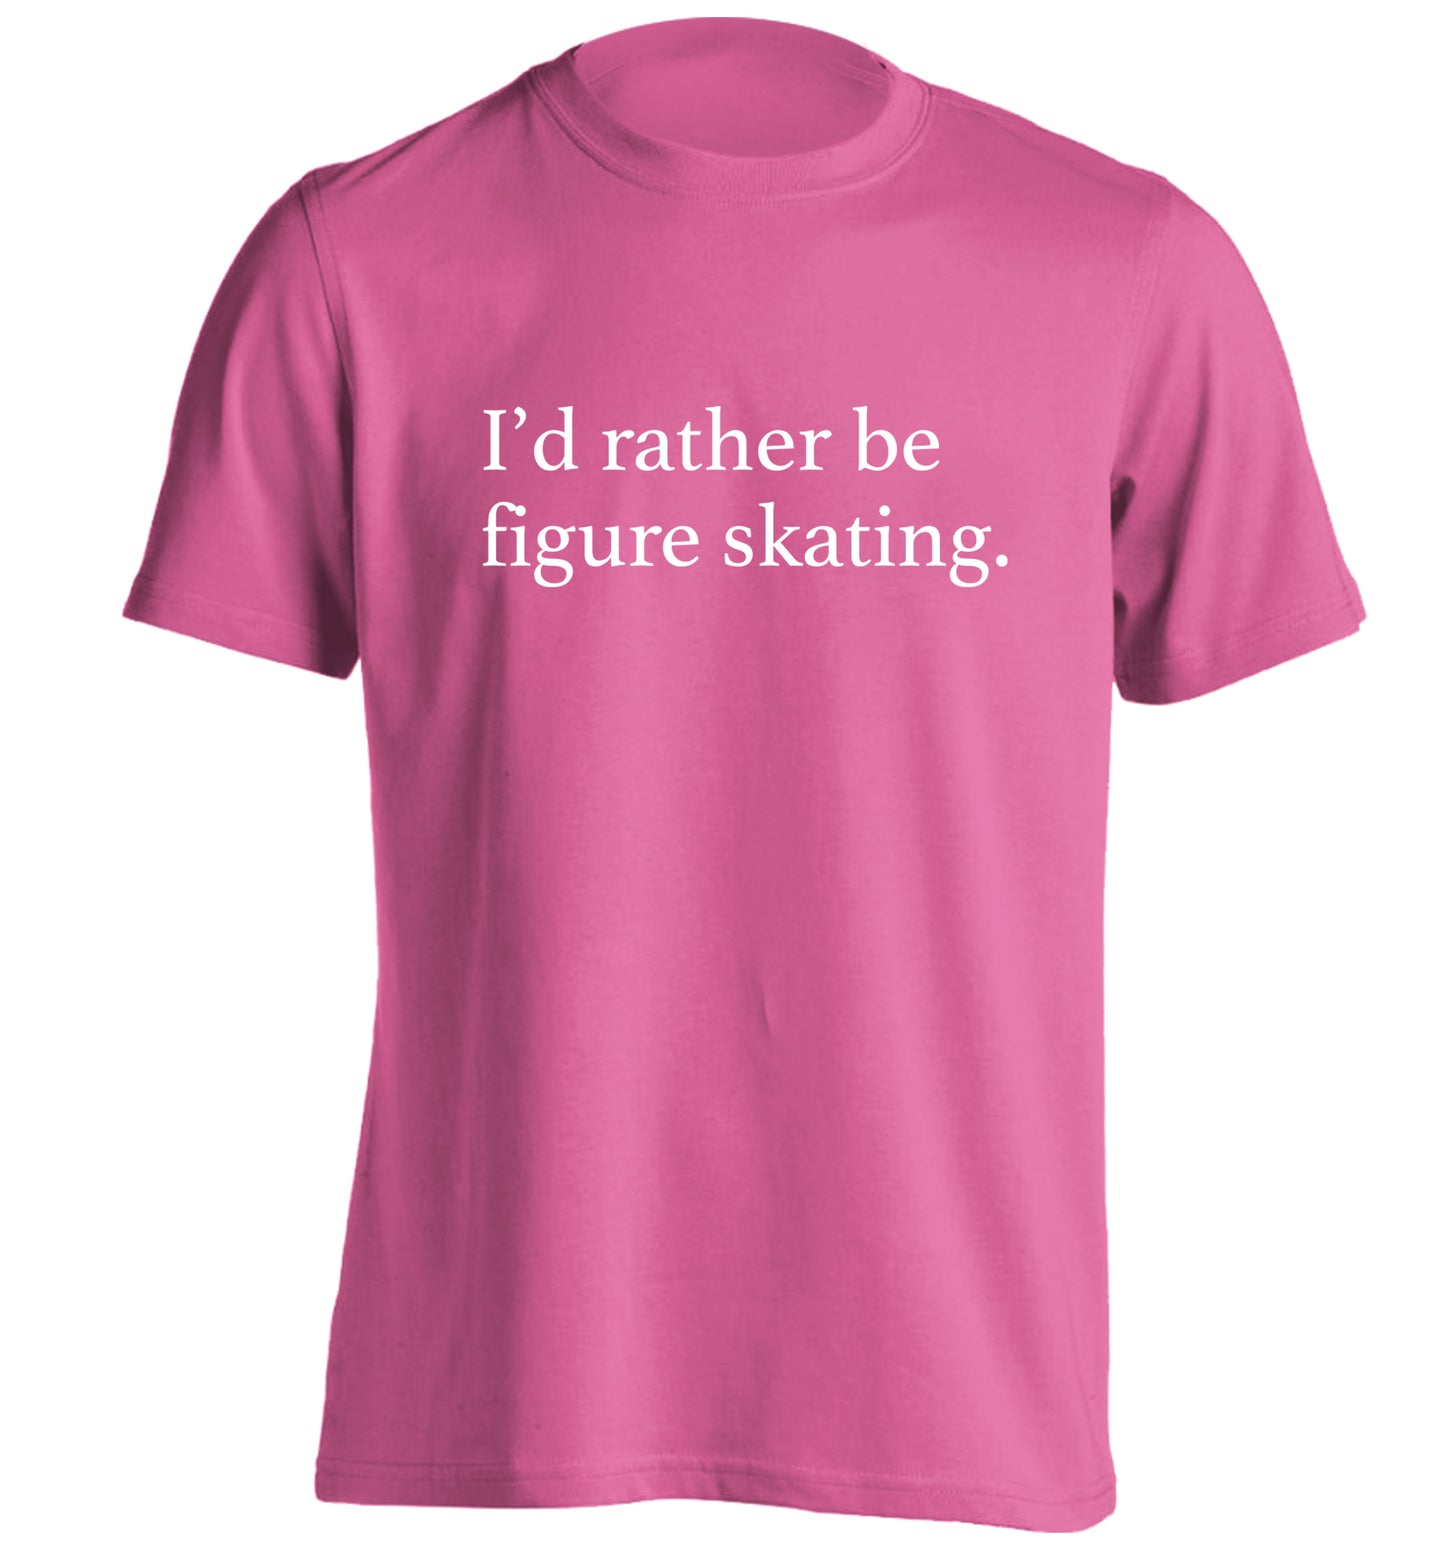 I'd rather be figure skating adults unisexpink Tshirt 2XL